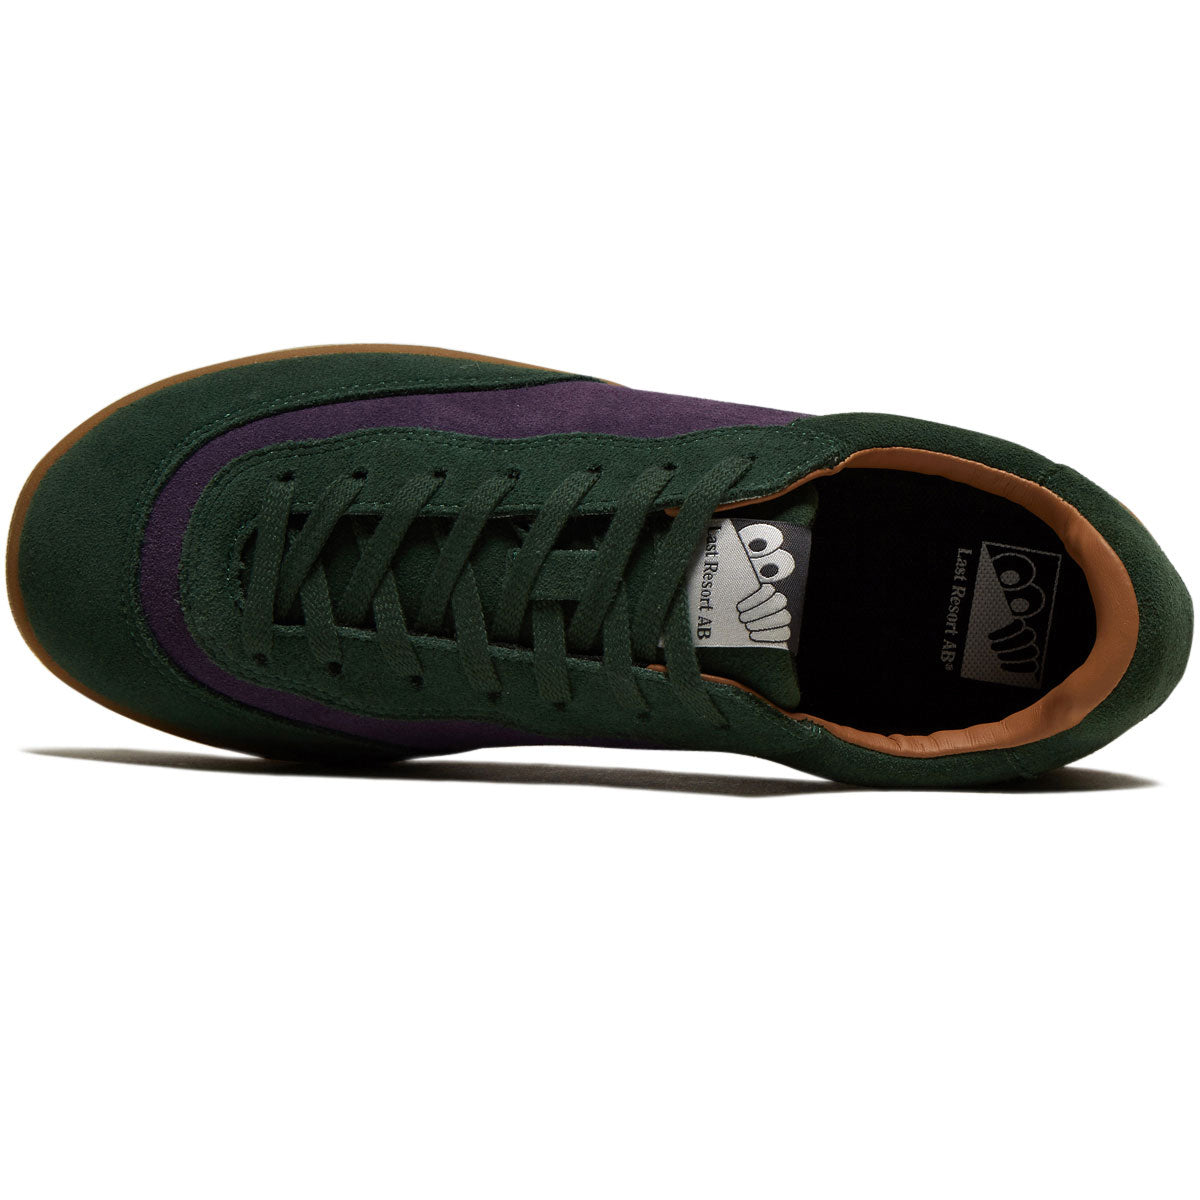 Last Resort AB CM001 Suede Shoes - Elm Green/Loganberry/Gum image 3